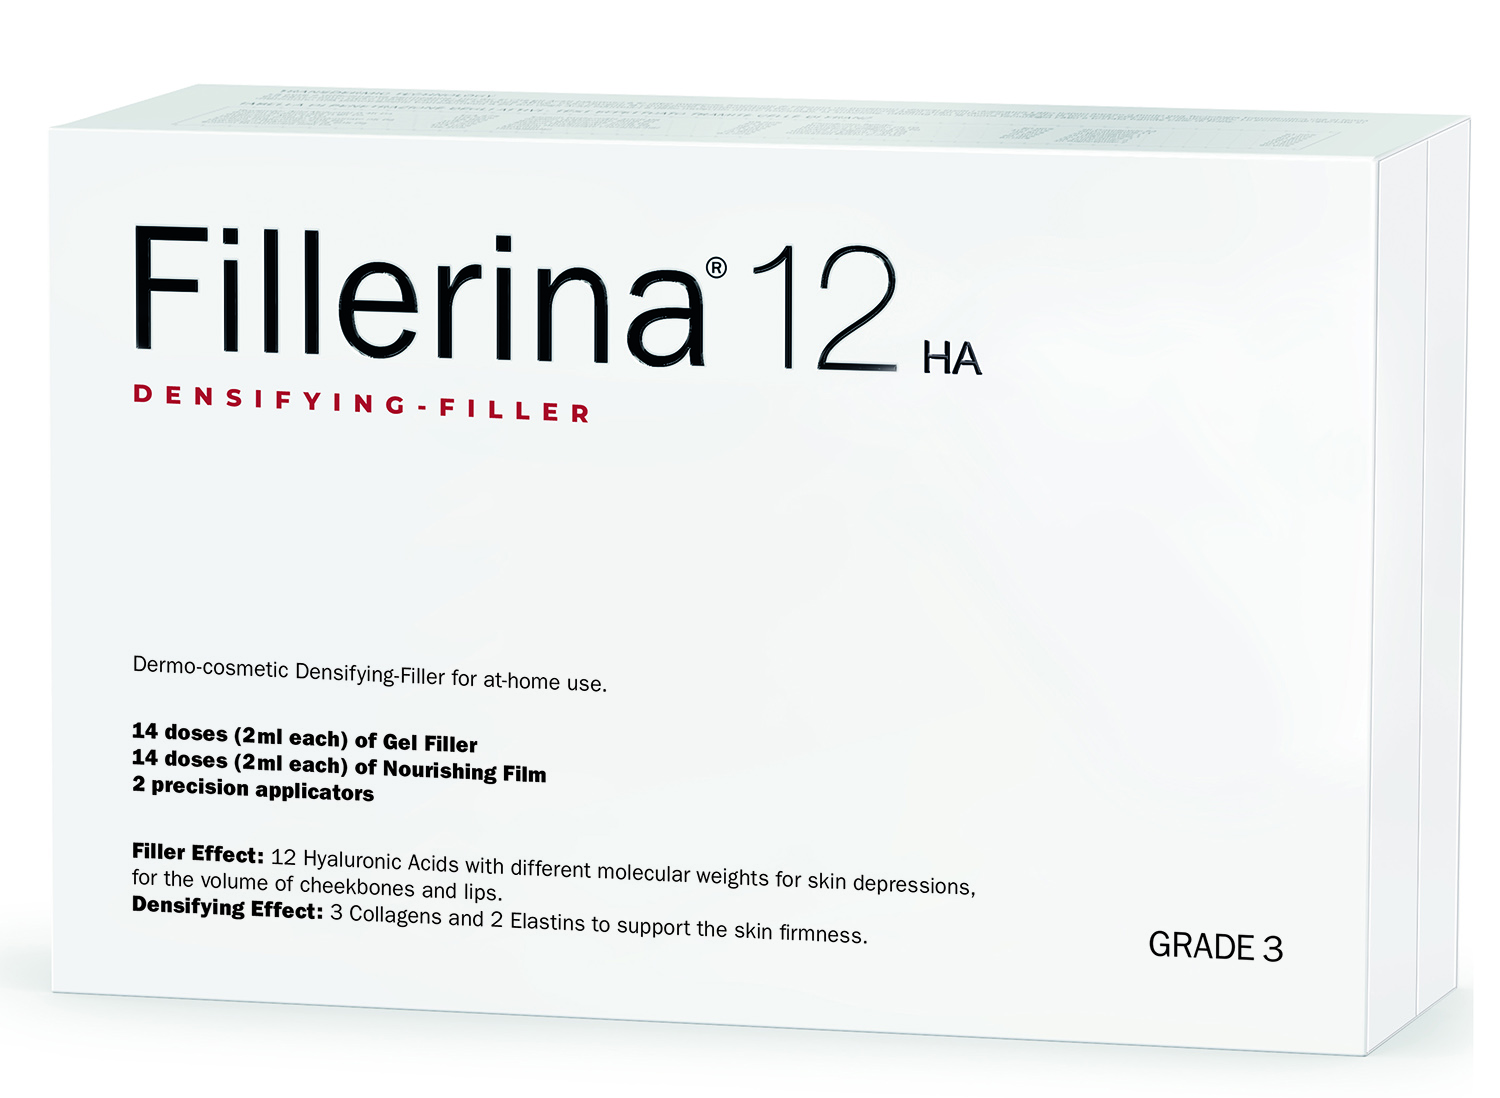 fillerina step1 косметический набор филлер крем 30 мл Fillerina Дермо-косметический набор с укрепляющим эффектом Intensive уровень 3, 2 флакона х 30 мл (Fillerina, 12 HA Densifying-Filler)